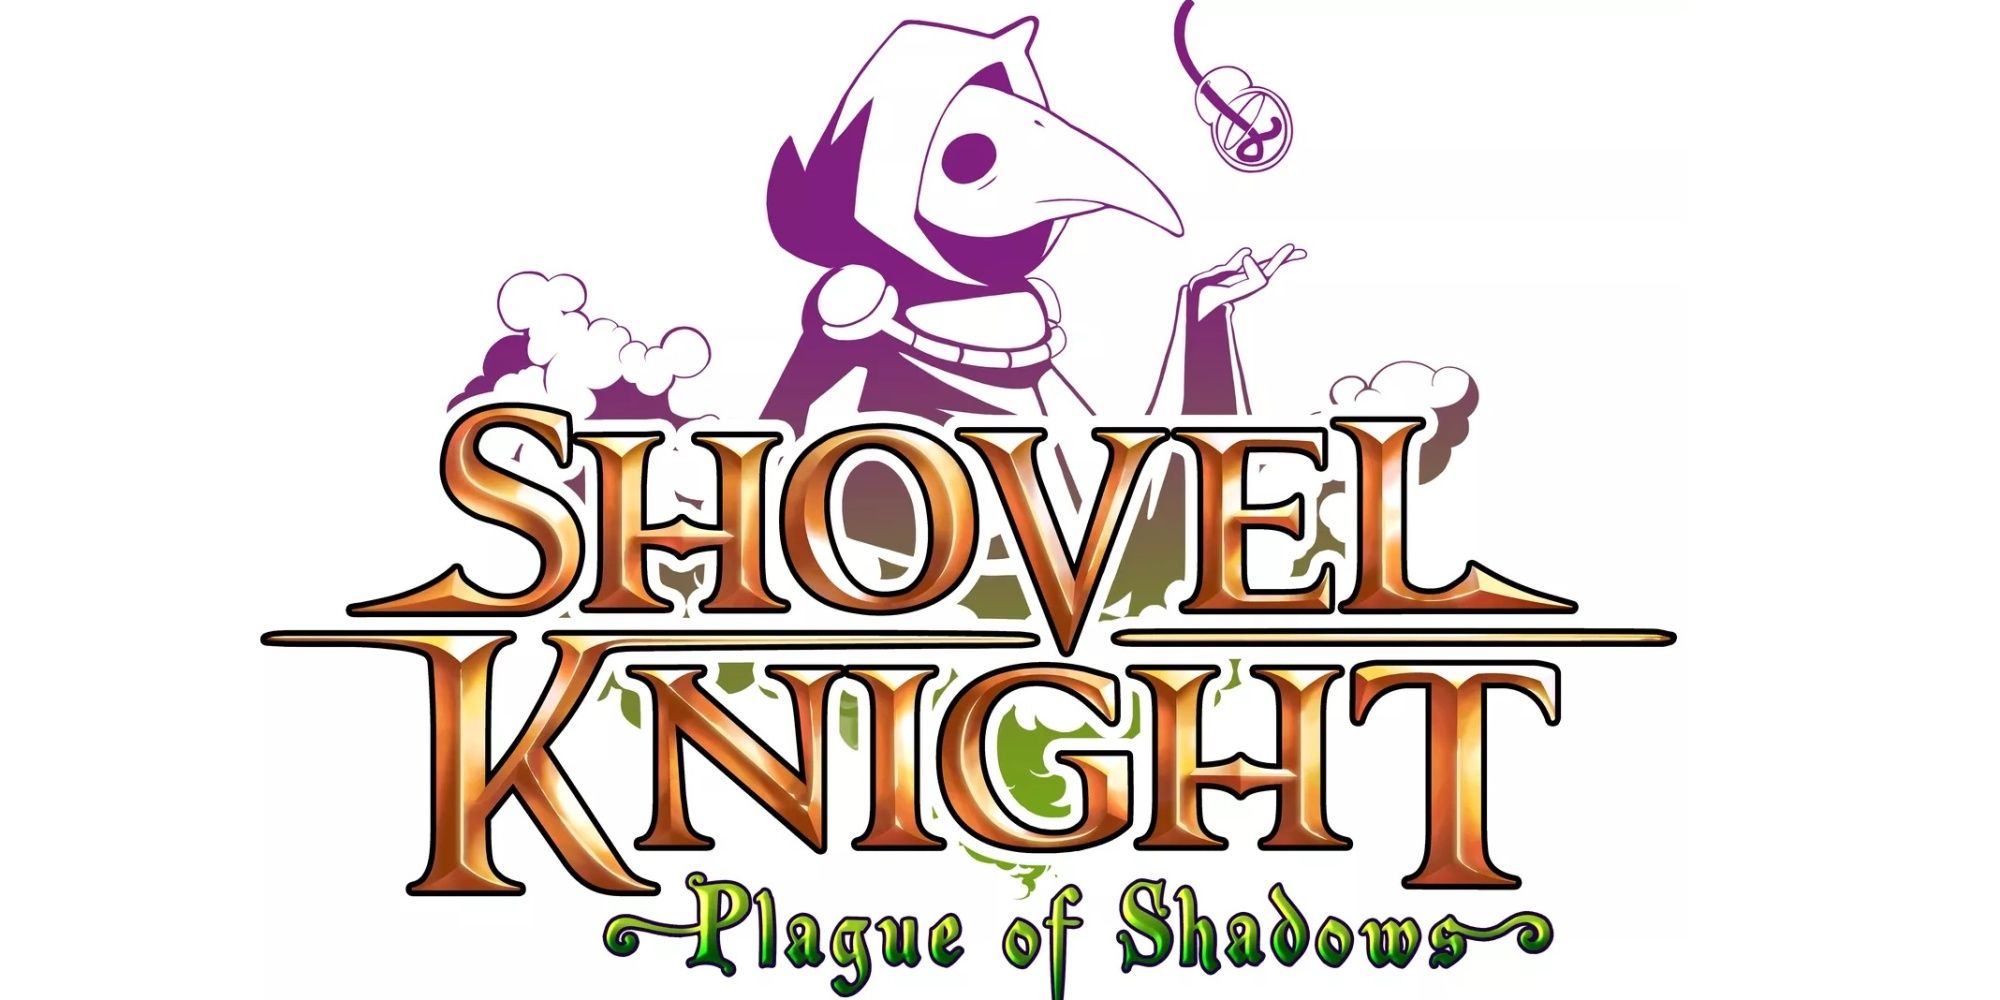 The logo for Shovel Knight Plague of Shadows